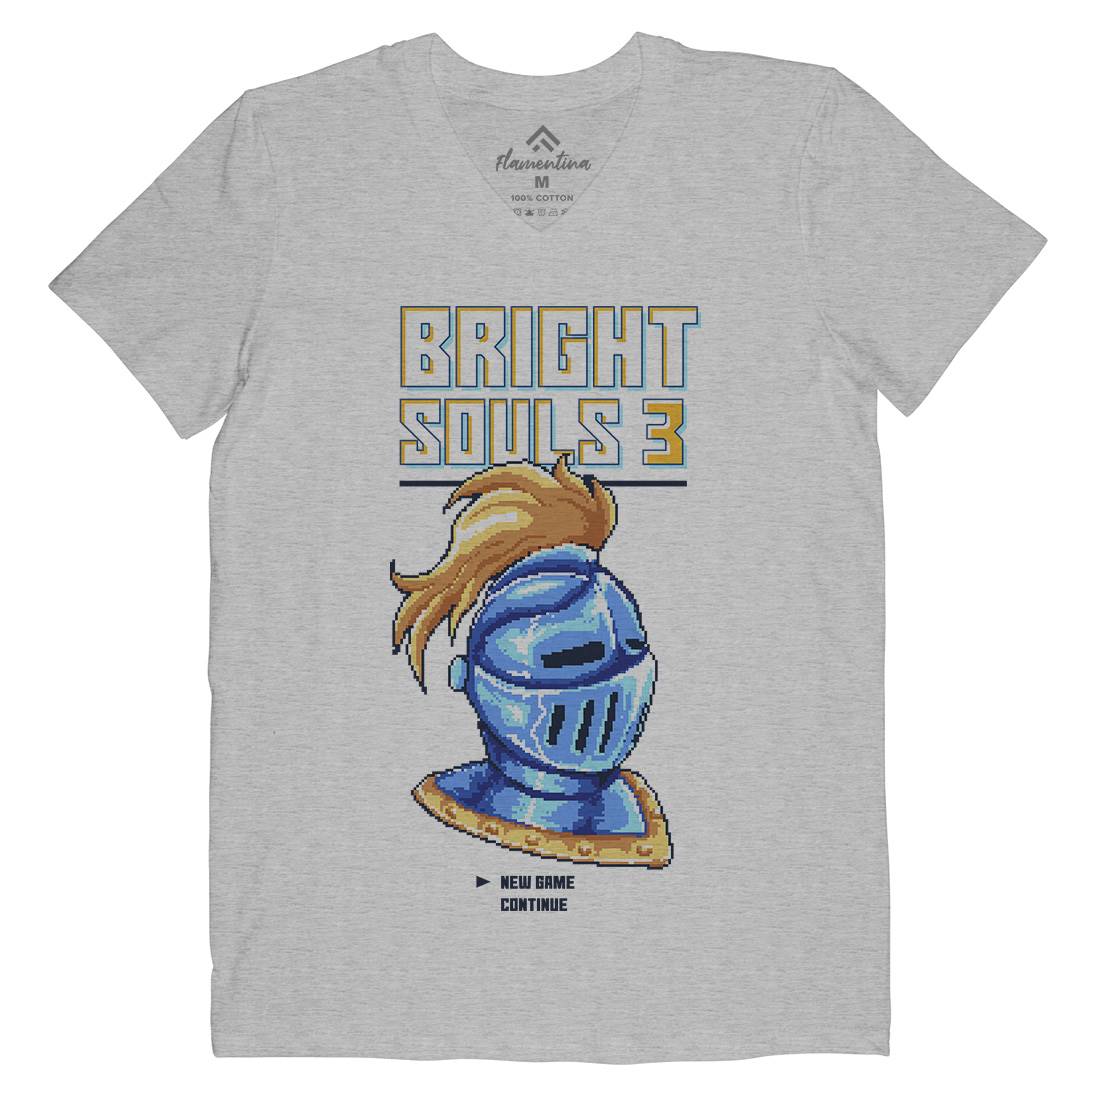 Bright Souls Knight Mens Organic V-Neck T-Shirt Retro B888